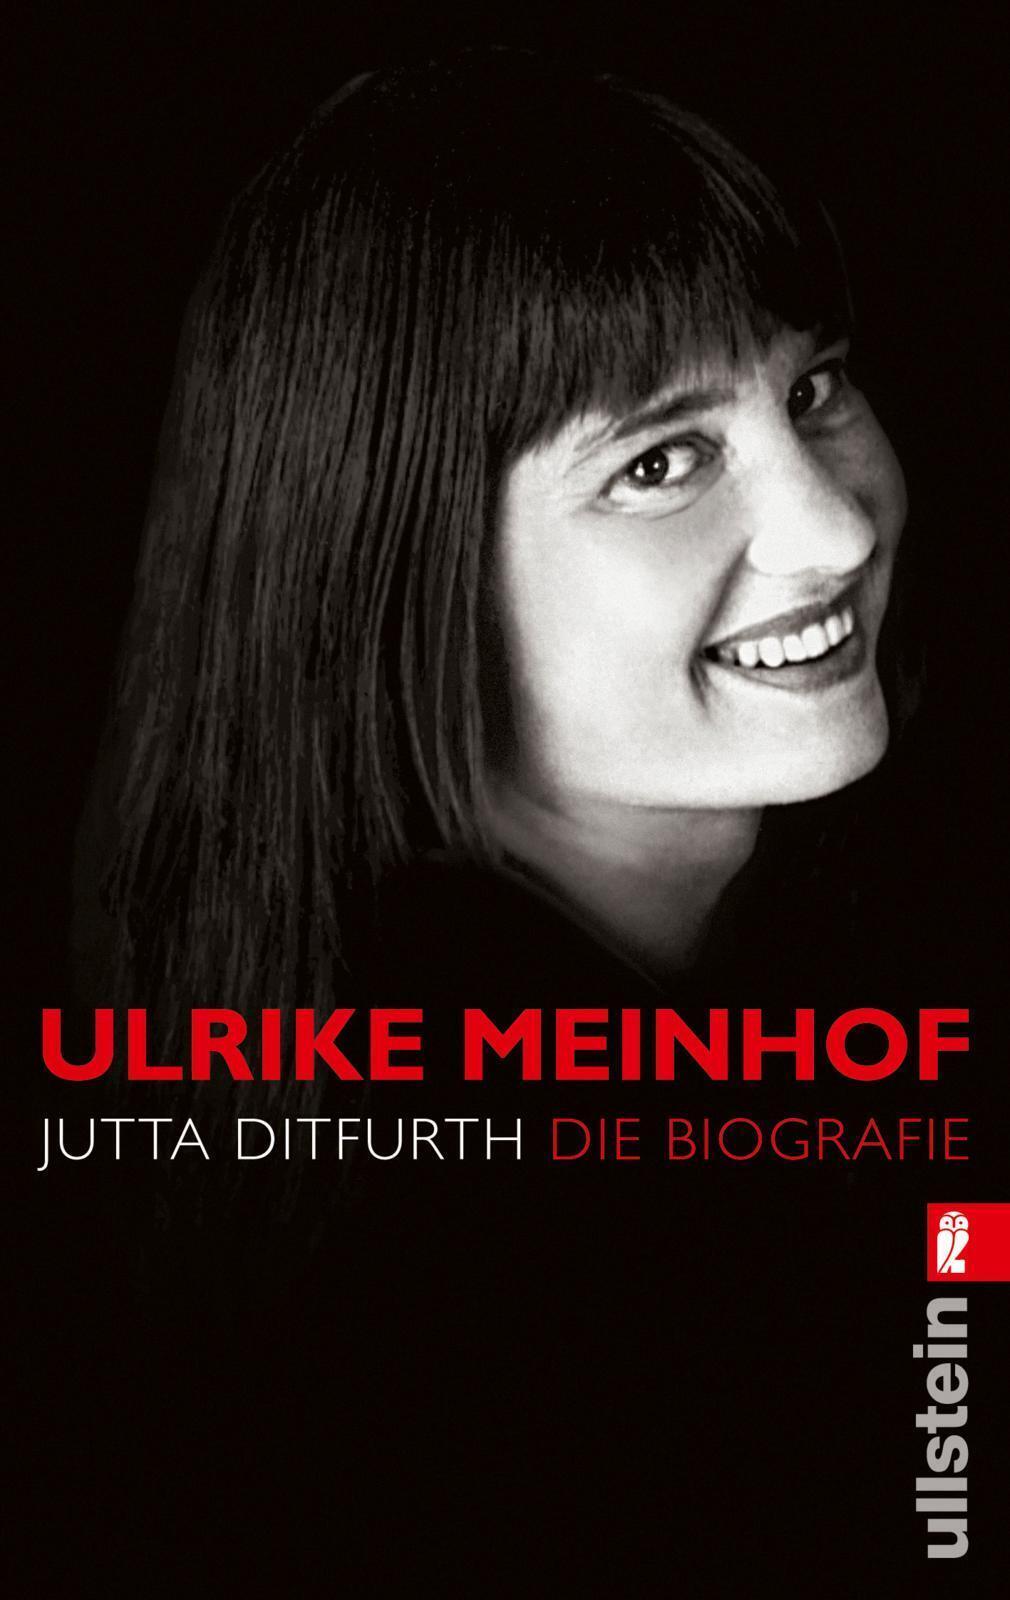 Ulrike Meinhof Jutta Ditfurth